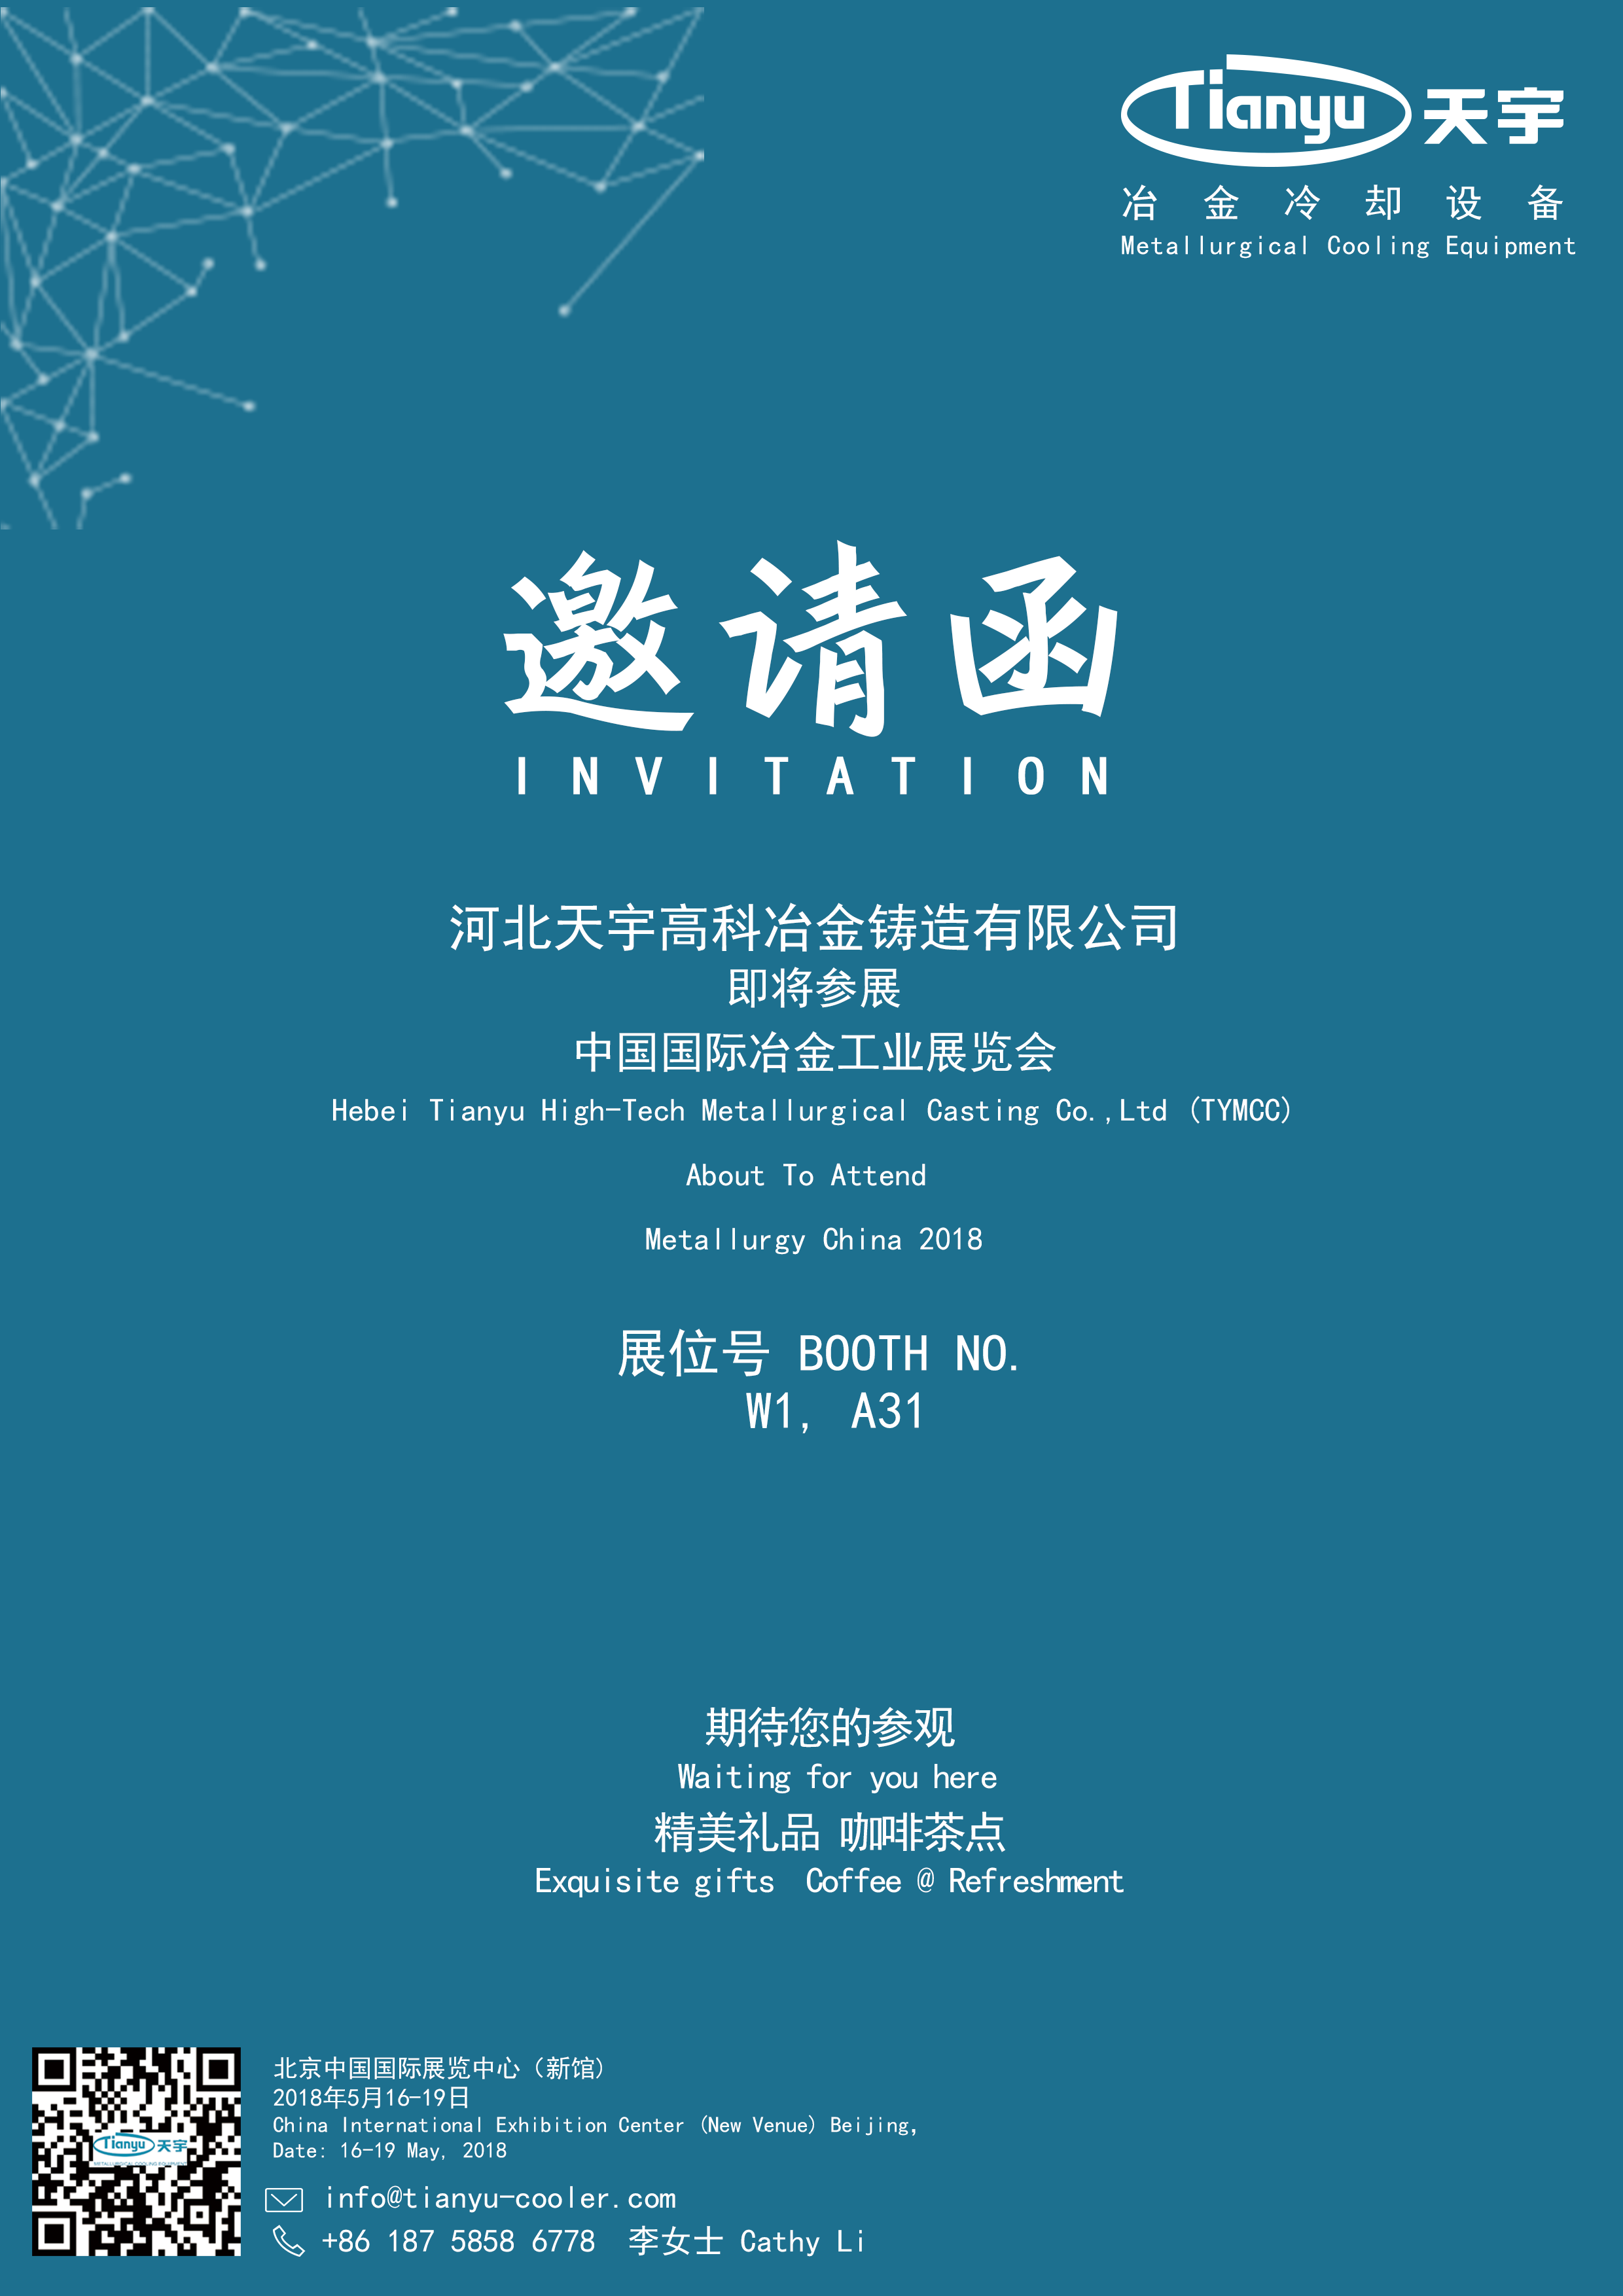 Tianyu will attend Metal + Metallurgy China 2018